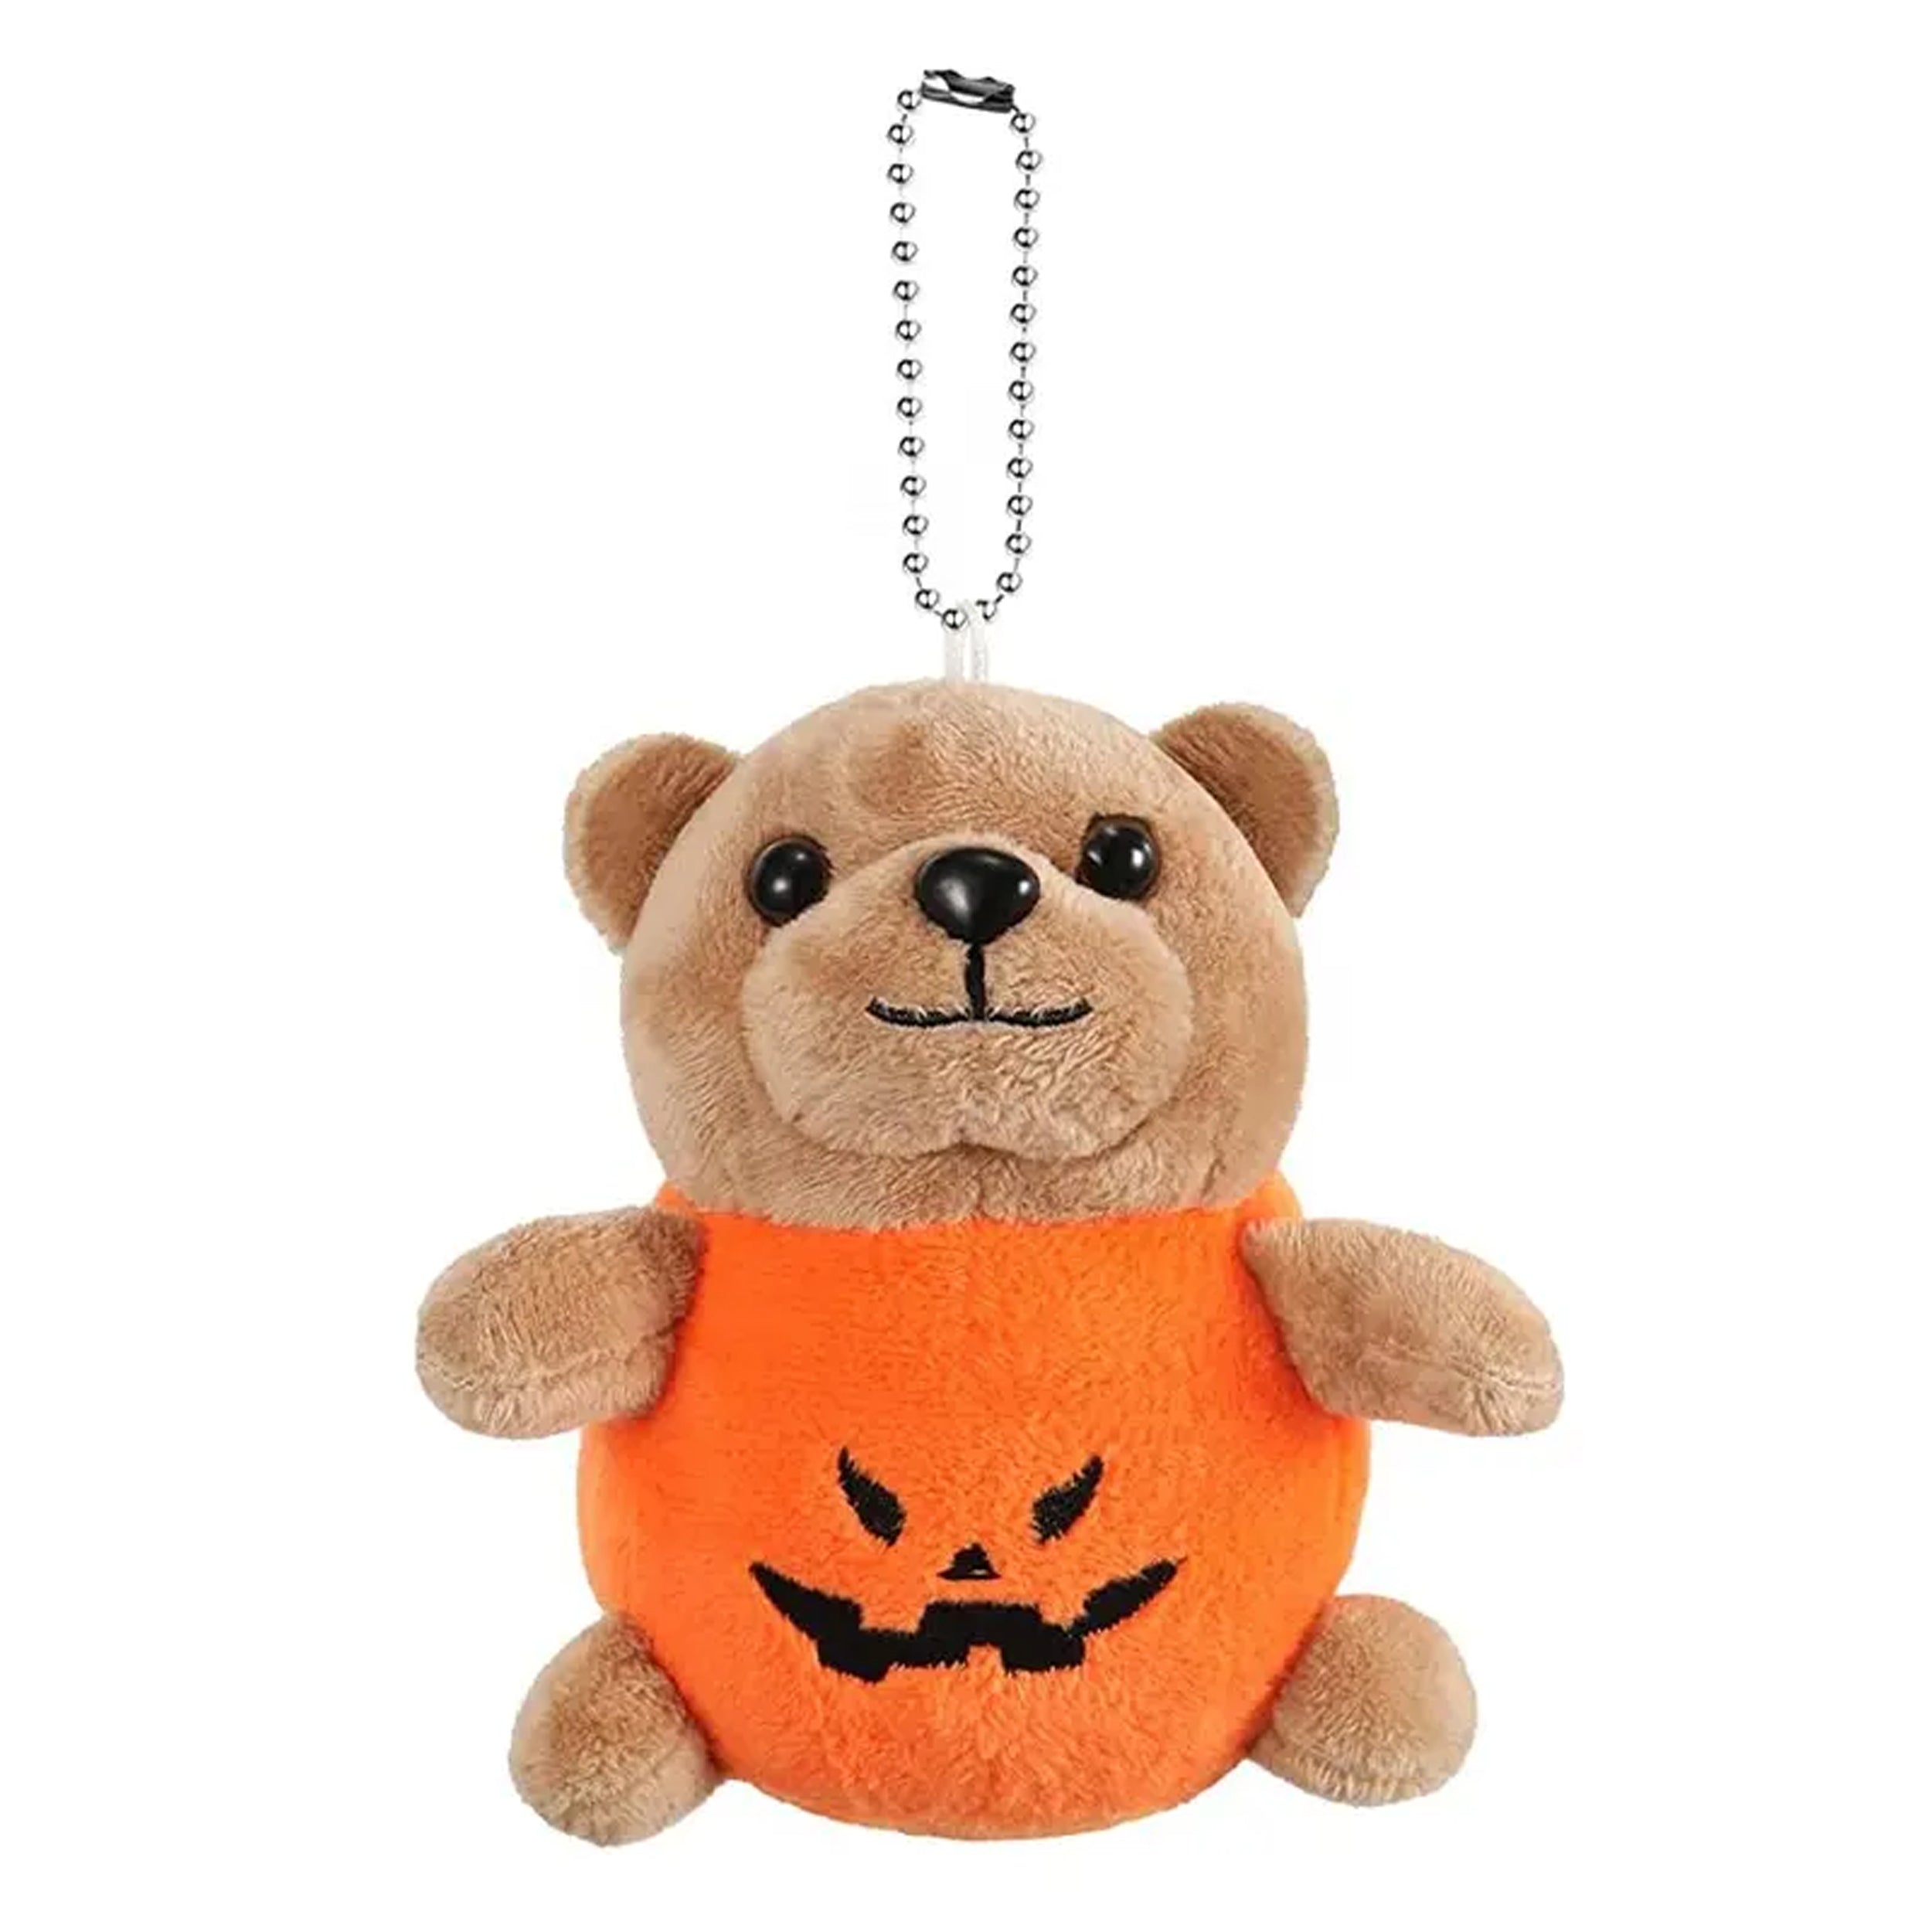 Plush Pumpkin Teddy Bear